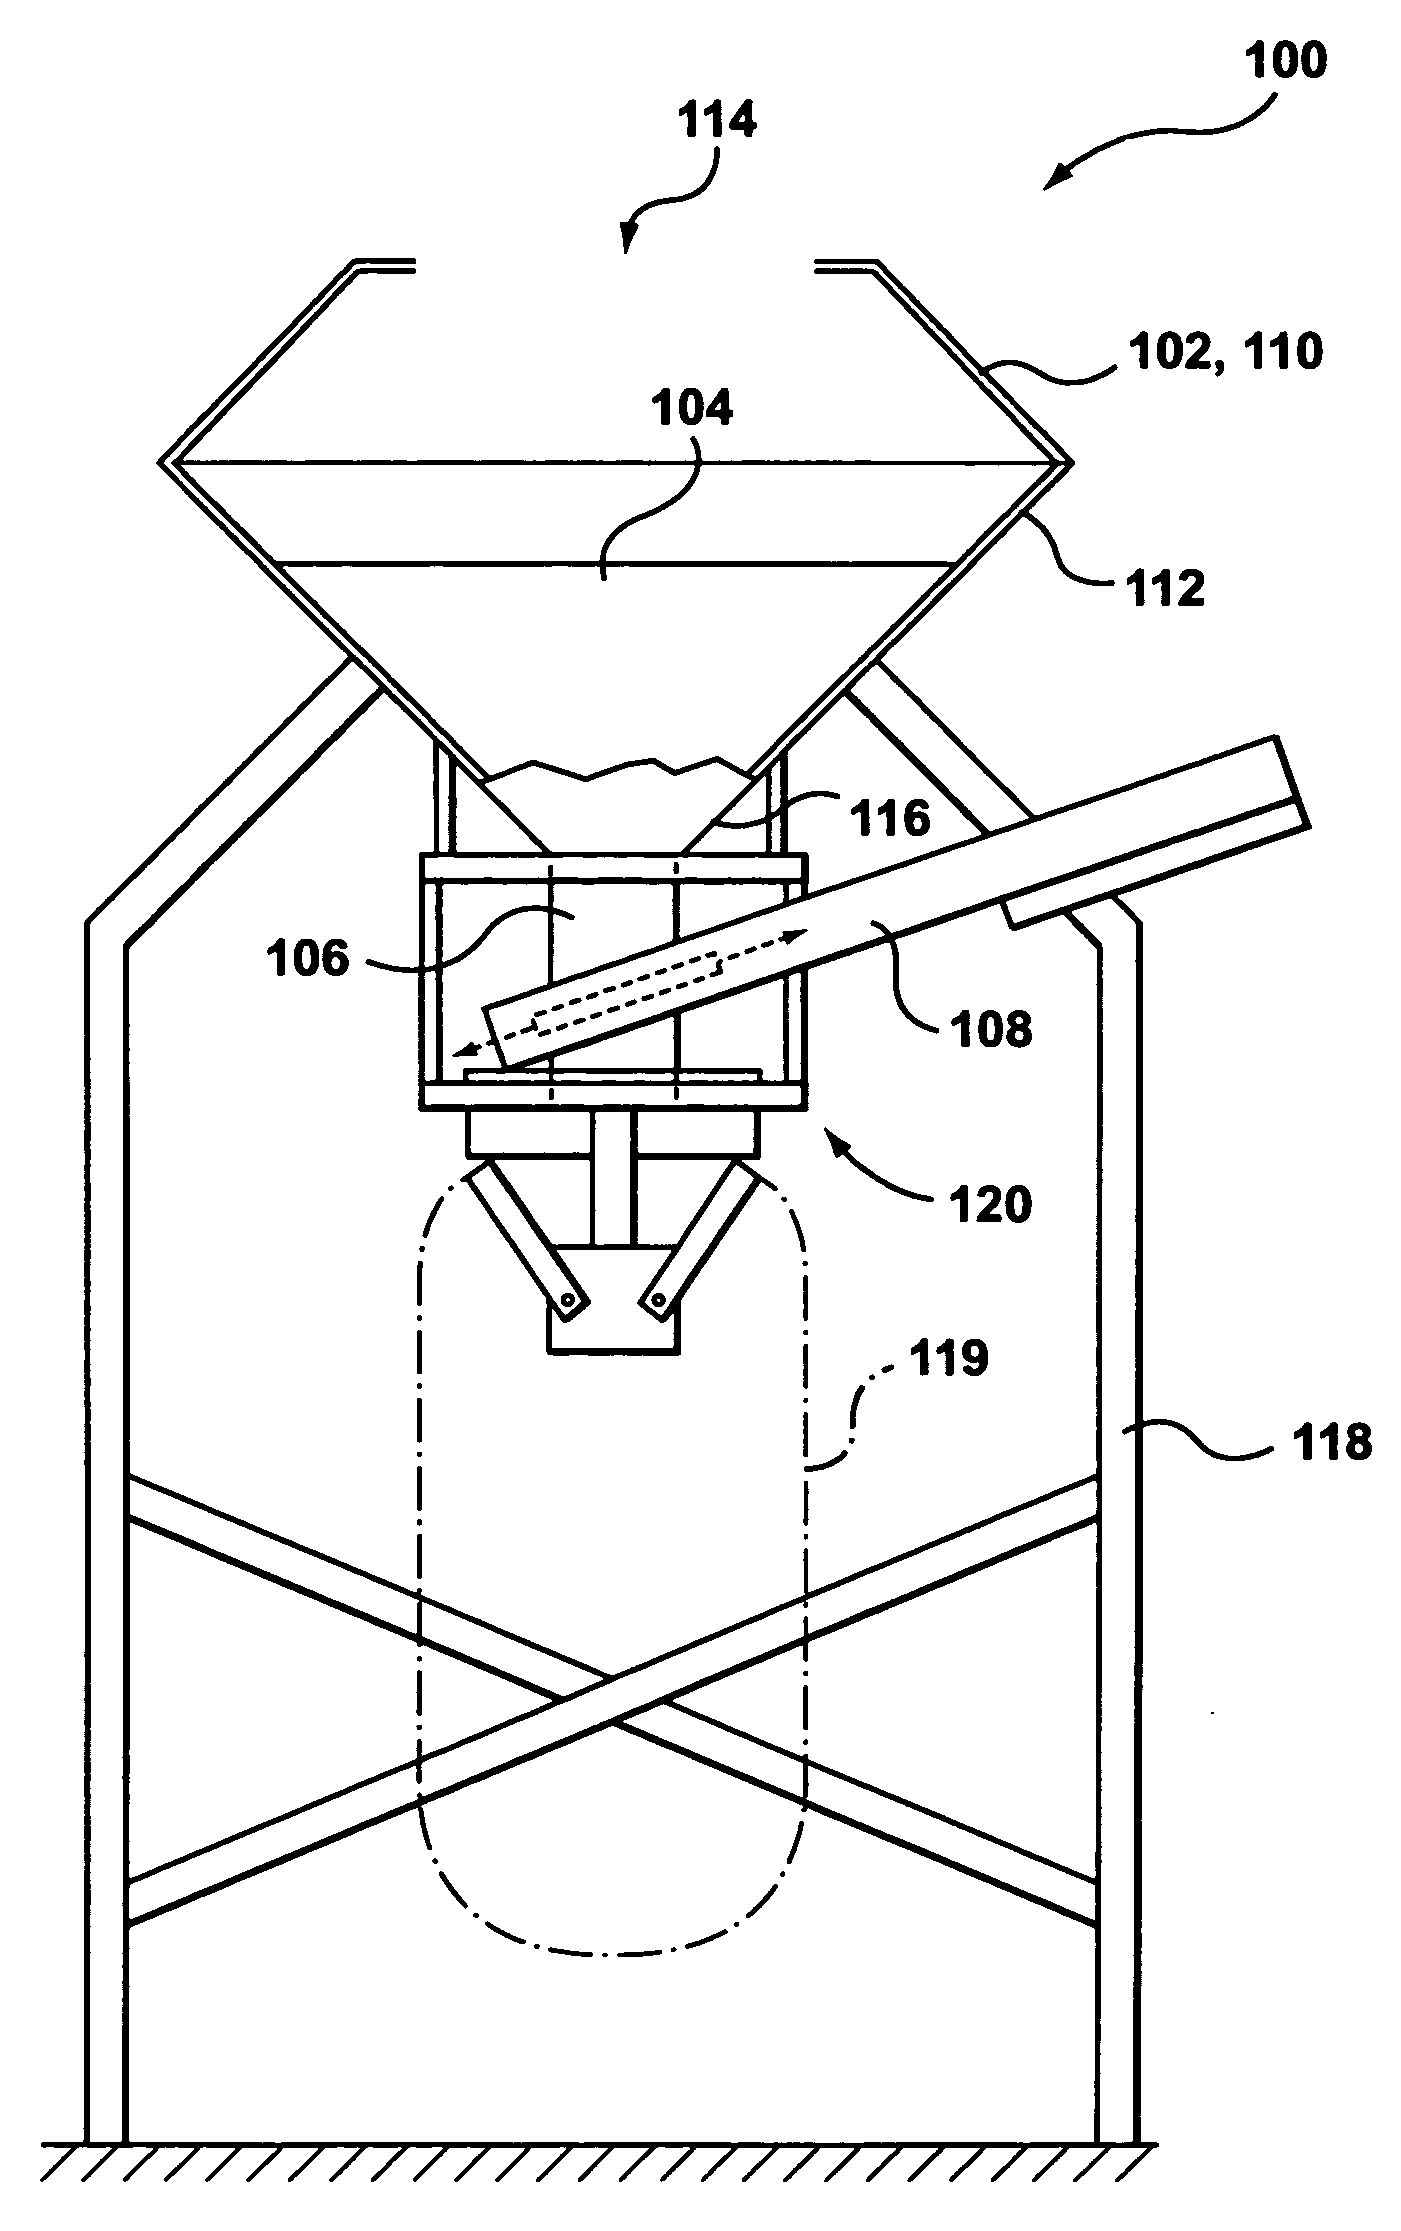 Product dispensing apparatus